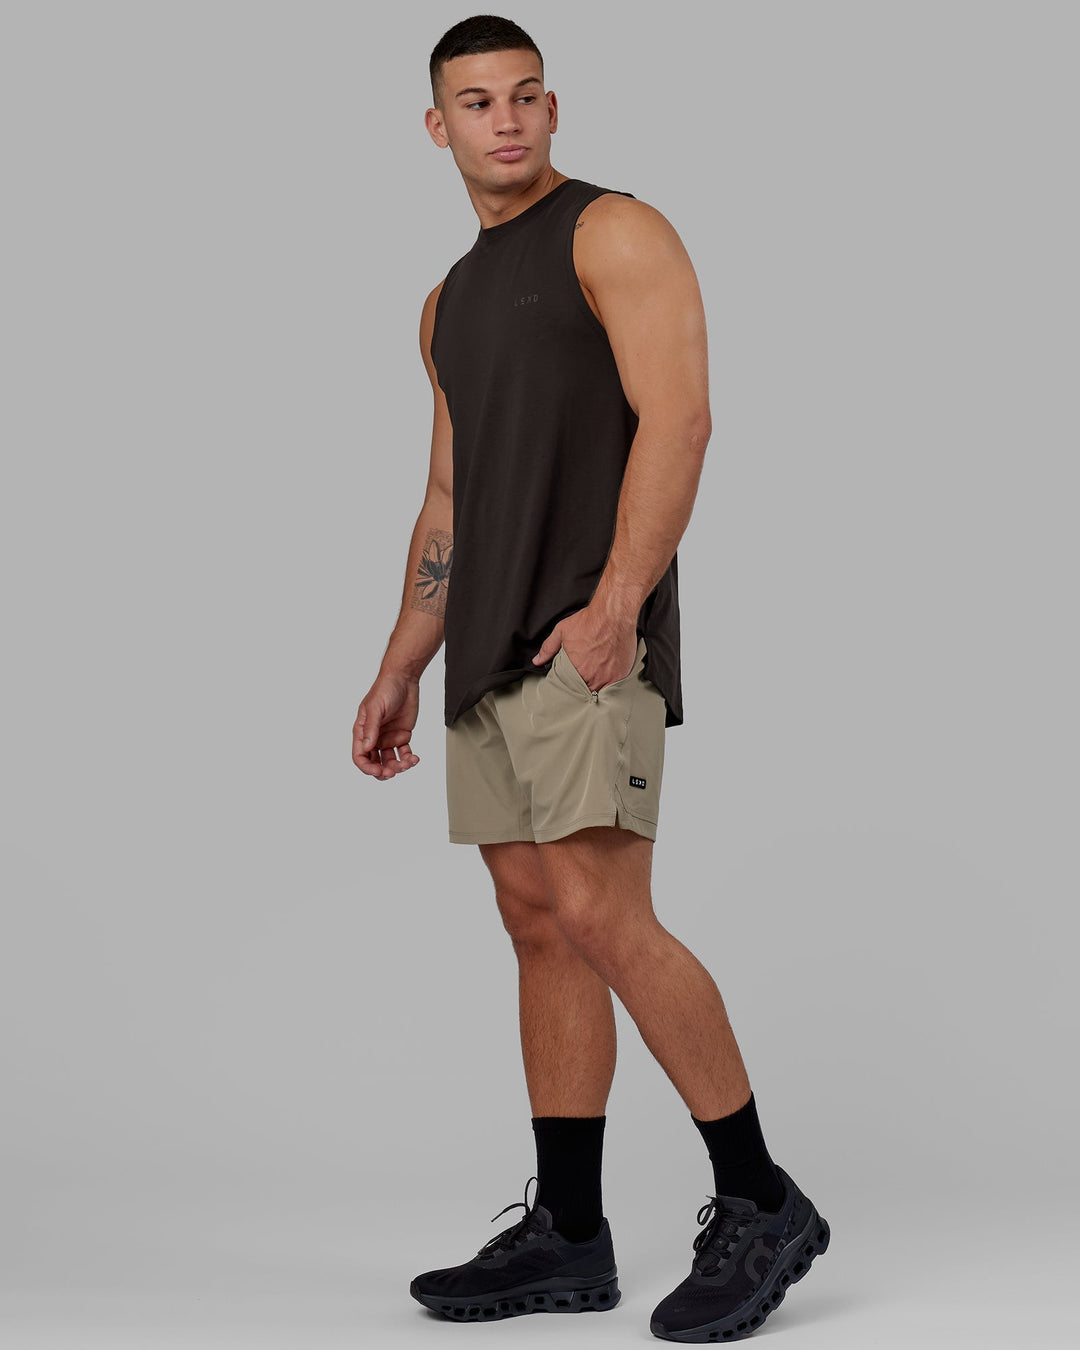 Man wearing Challenger 6" Performance Short - Laurel Oak